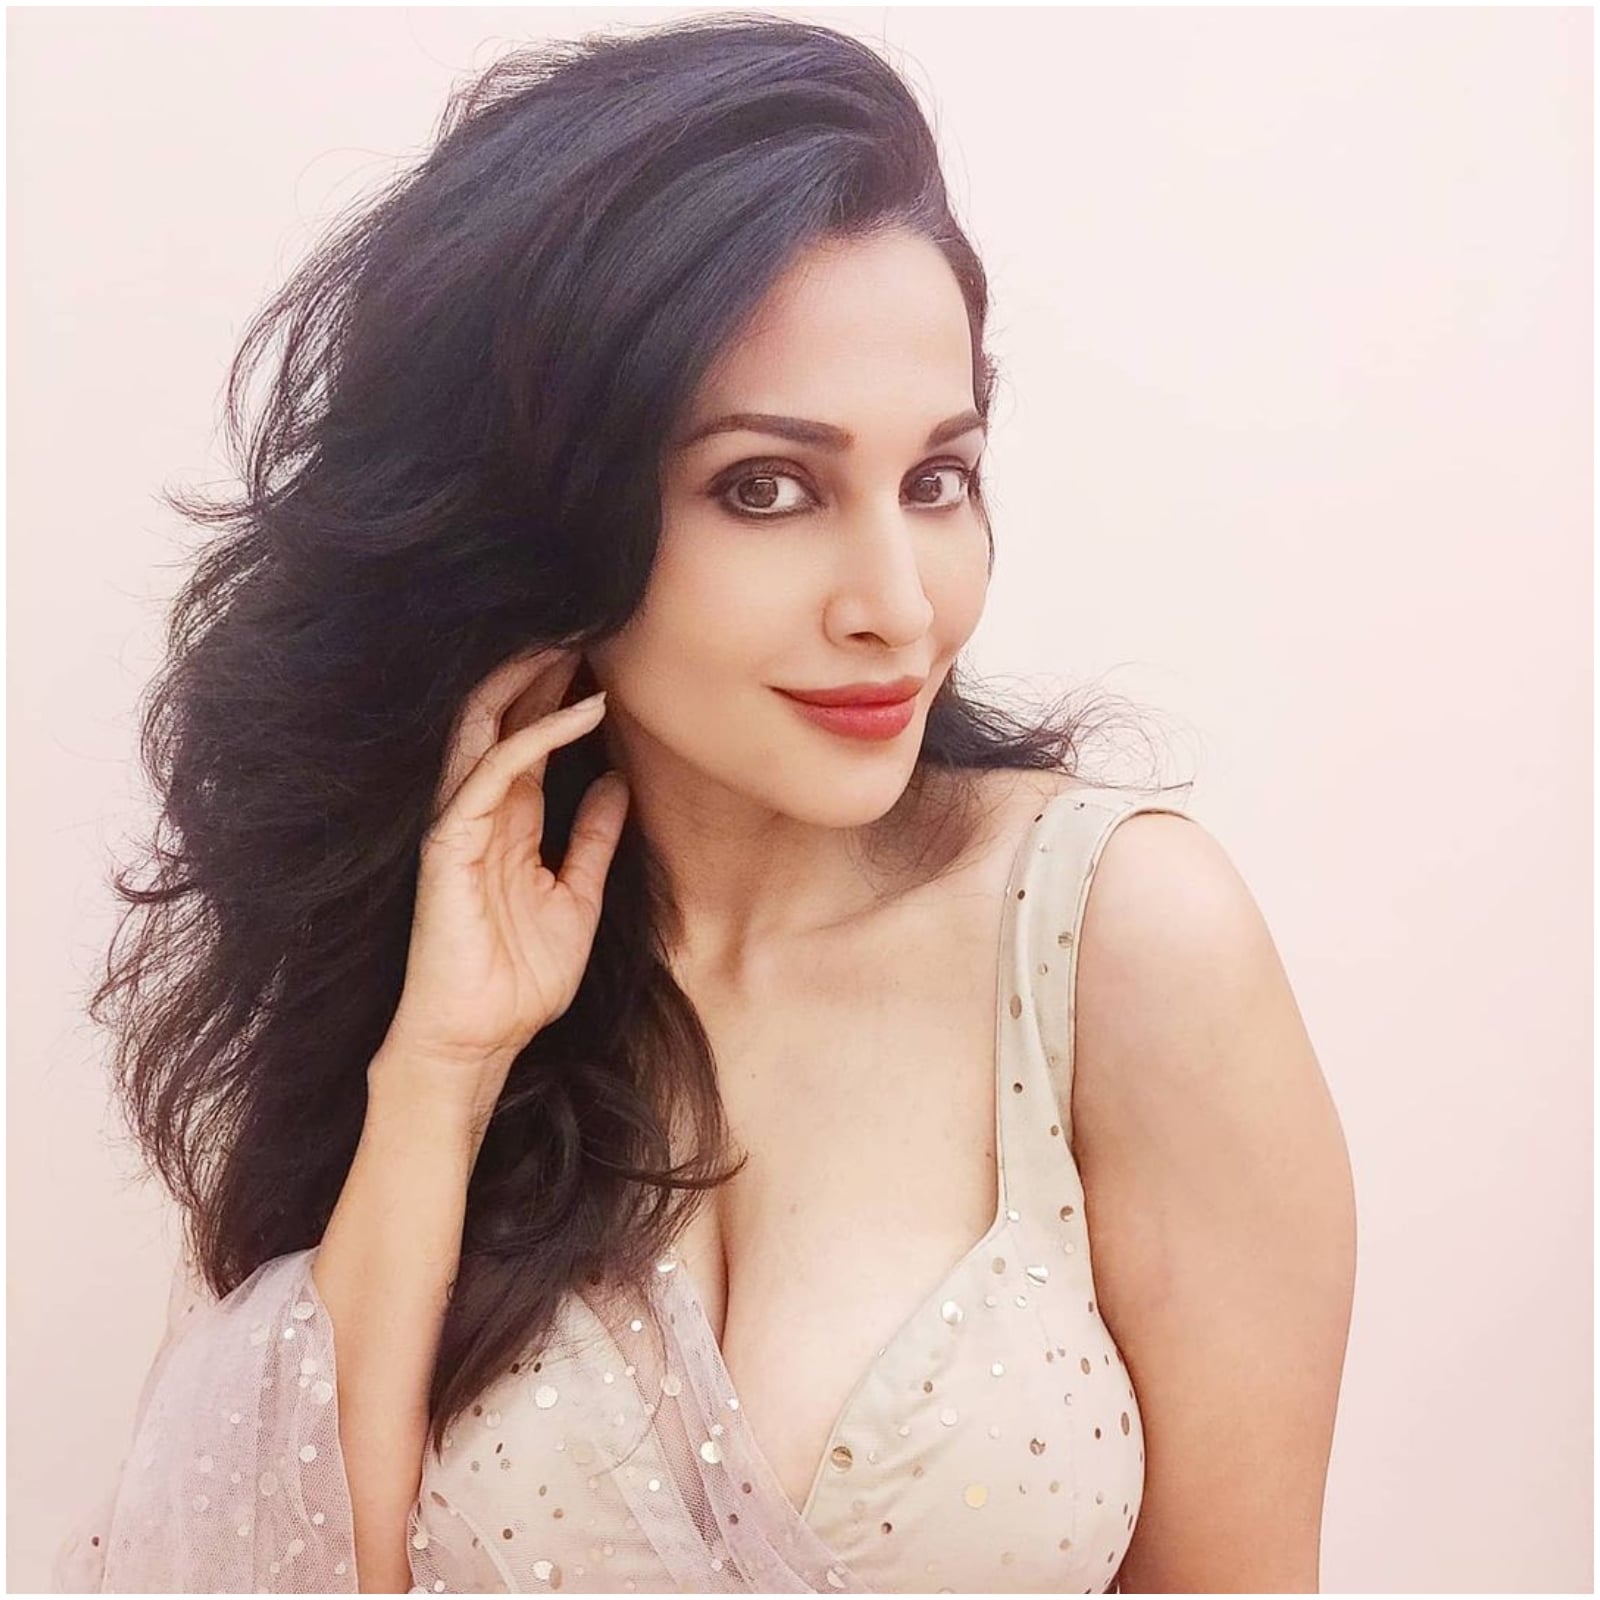 Raj Wab Com Bangila - Raj Kundra Case: 'Gandii Baat' Actress Flora Saini Said No When Approached  for Content on HotShots App - News18